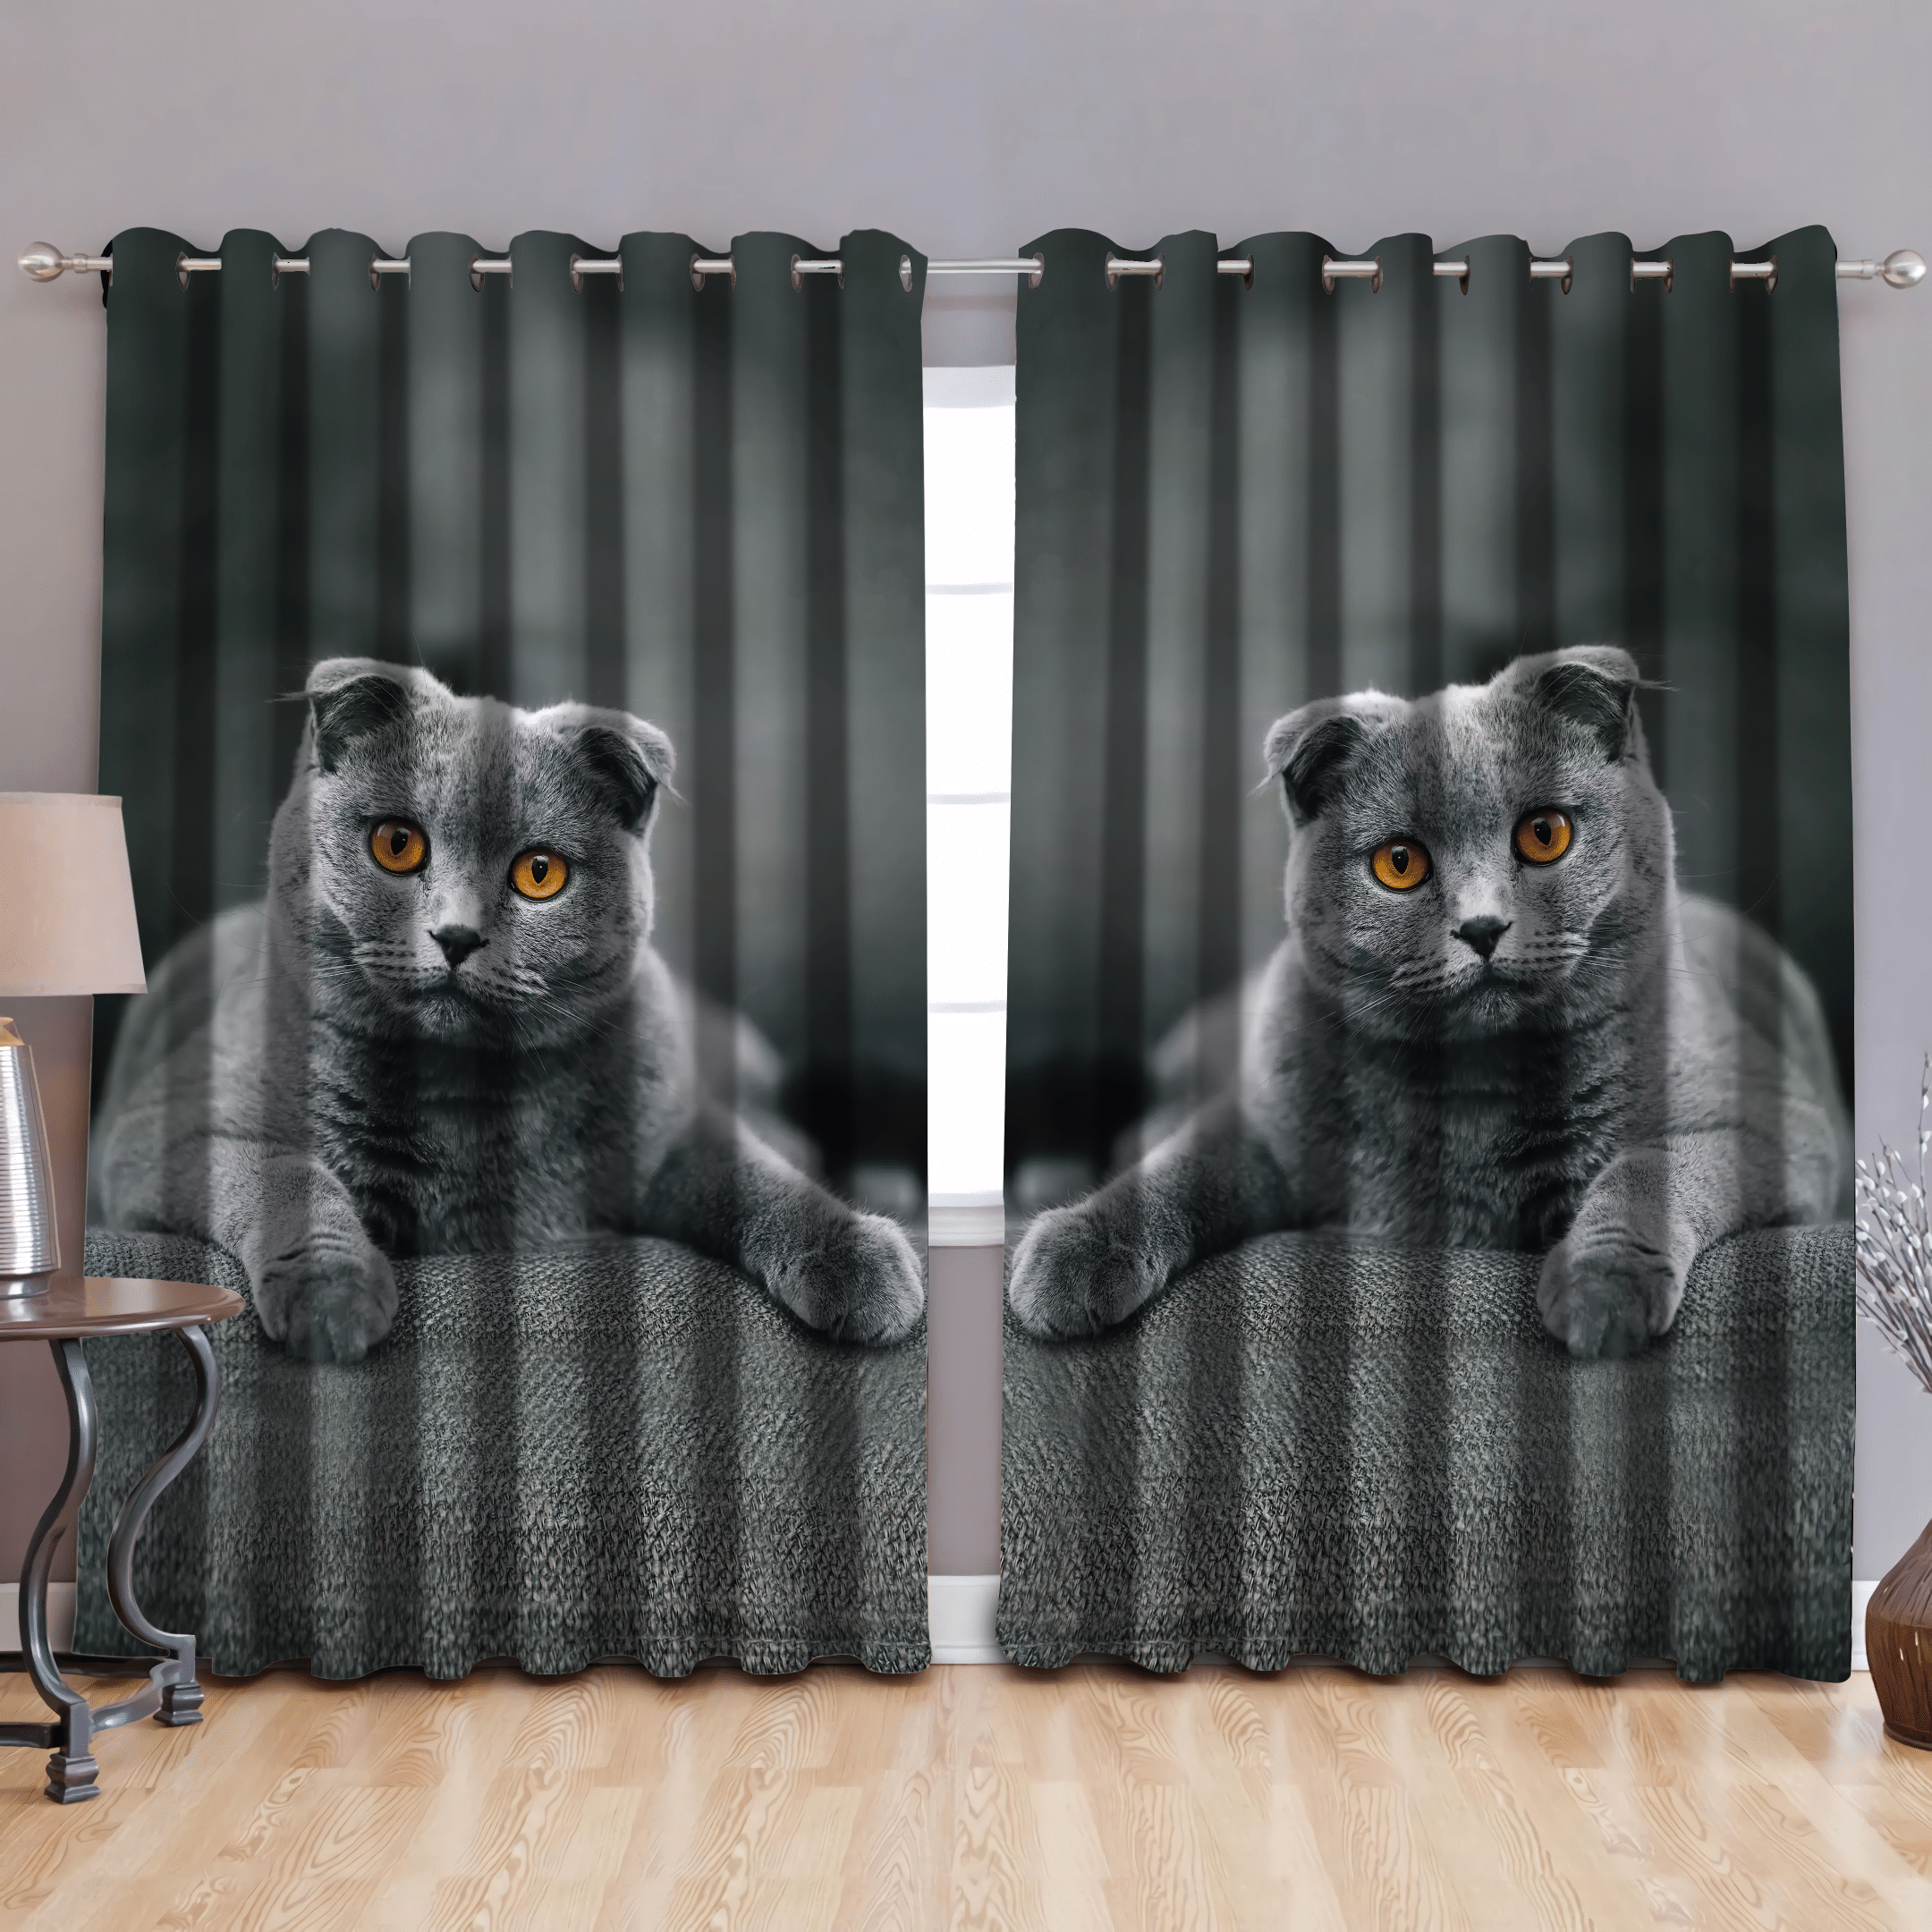 cute short hair scottish cat printed window curtain home decor 4017